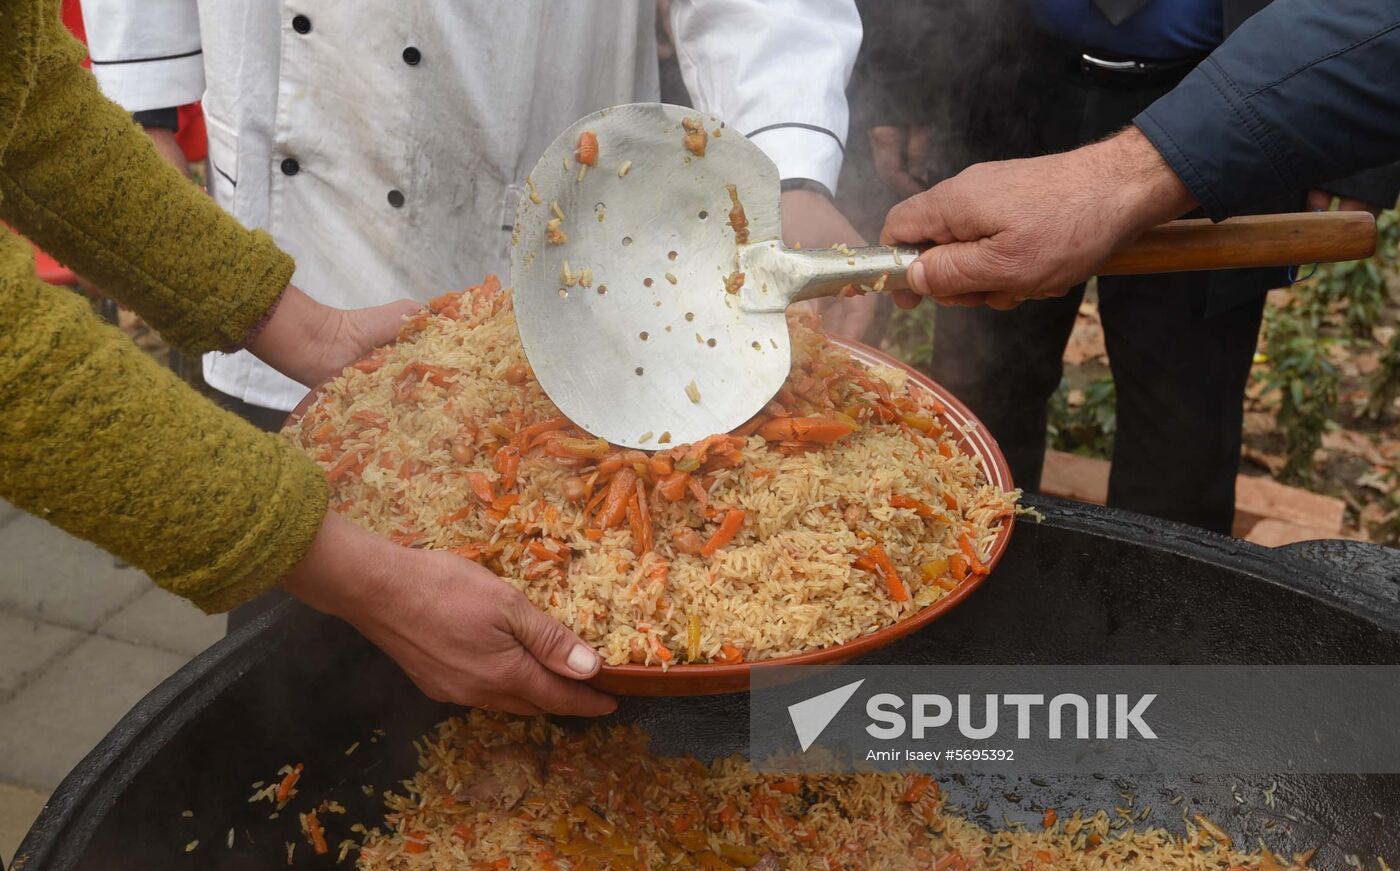 Tajikistan Pilaf Festival